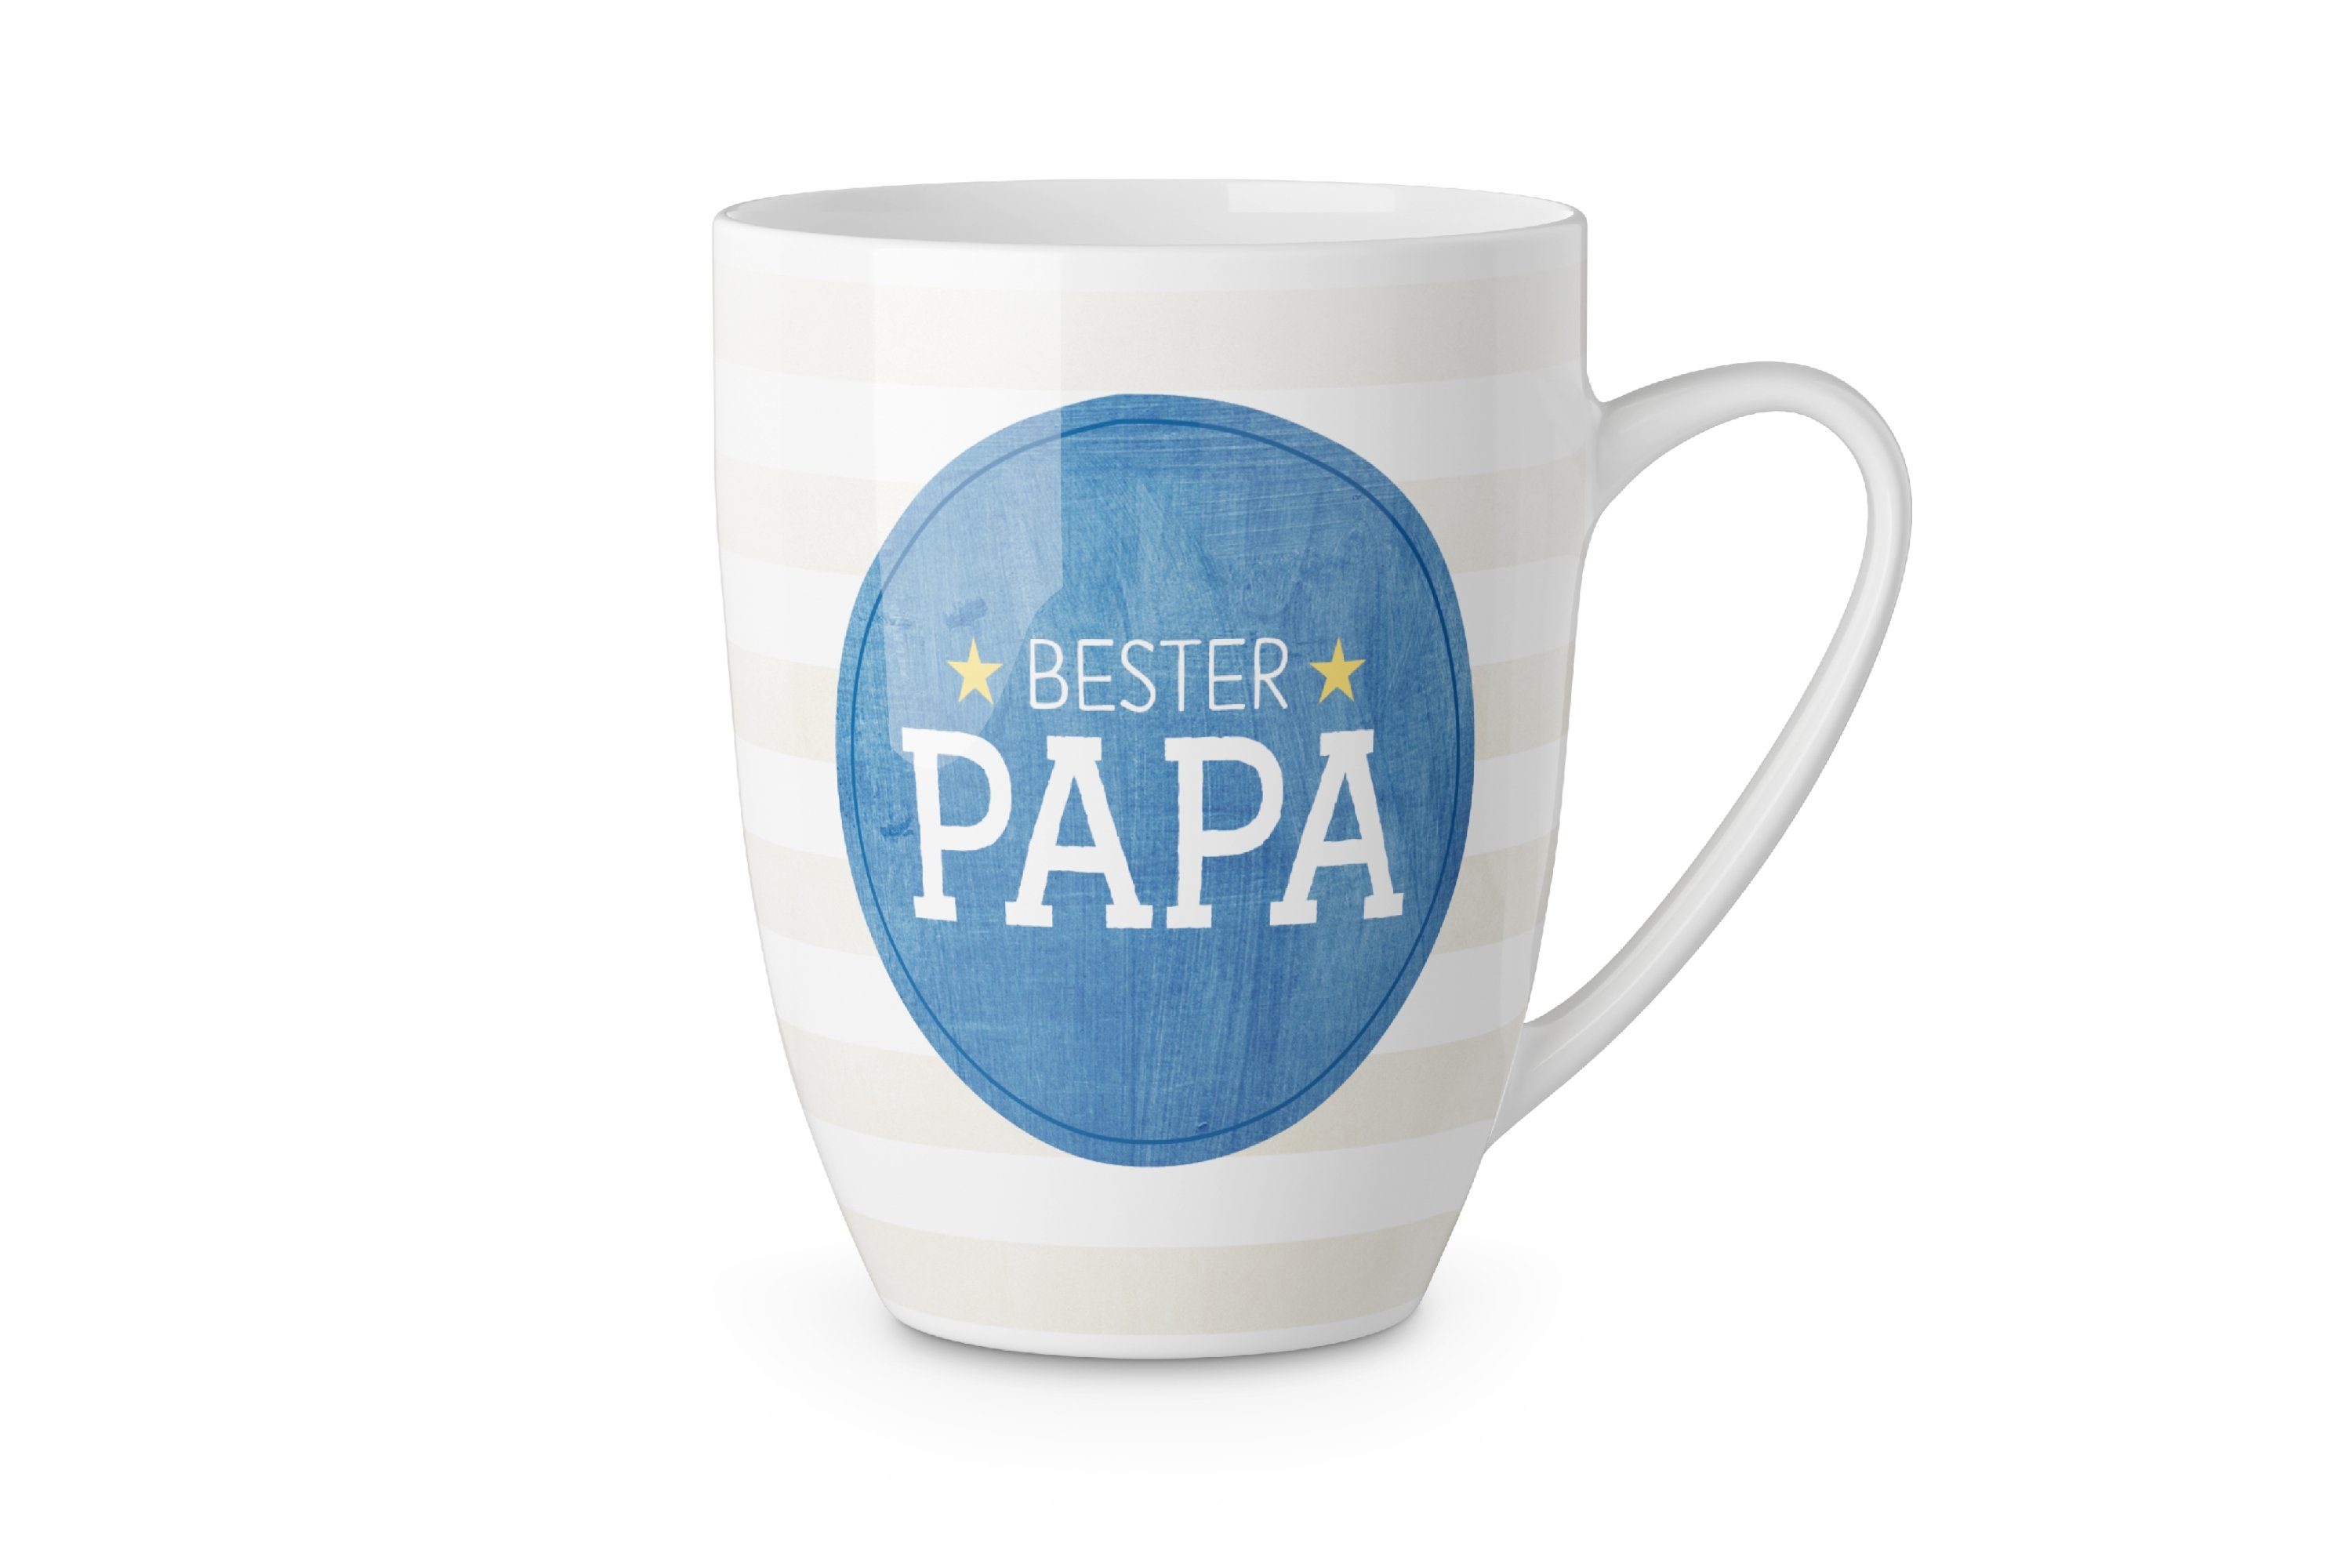 La Vida Tasse Kaffeetasse Kaffeebecher Tee Tasse Becher für dich la vida Mama Papa, Material: Keramik